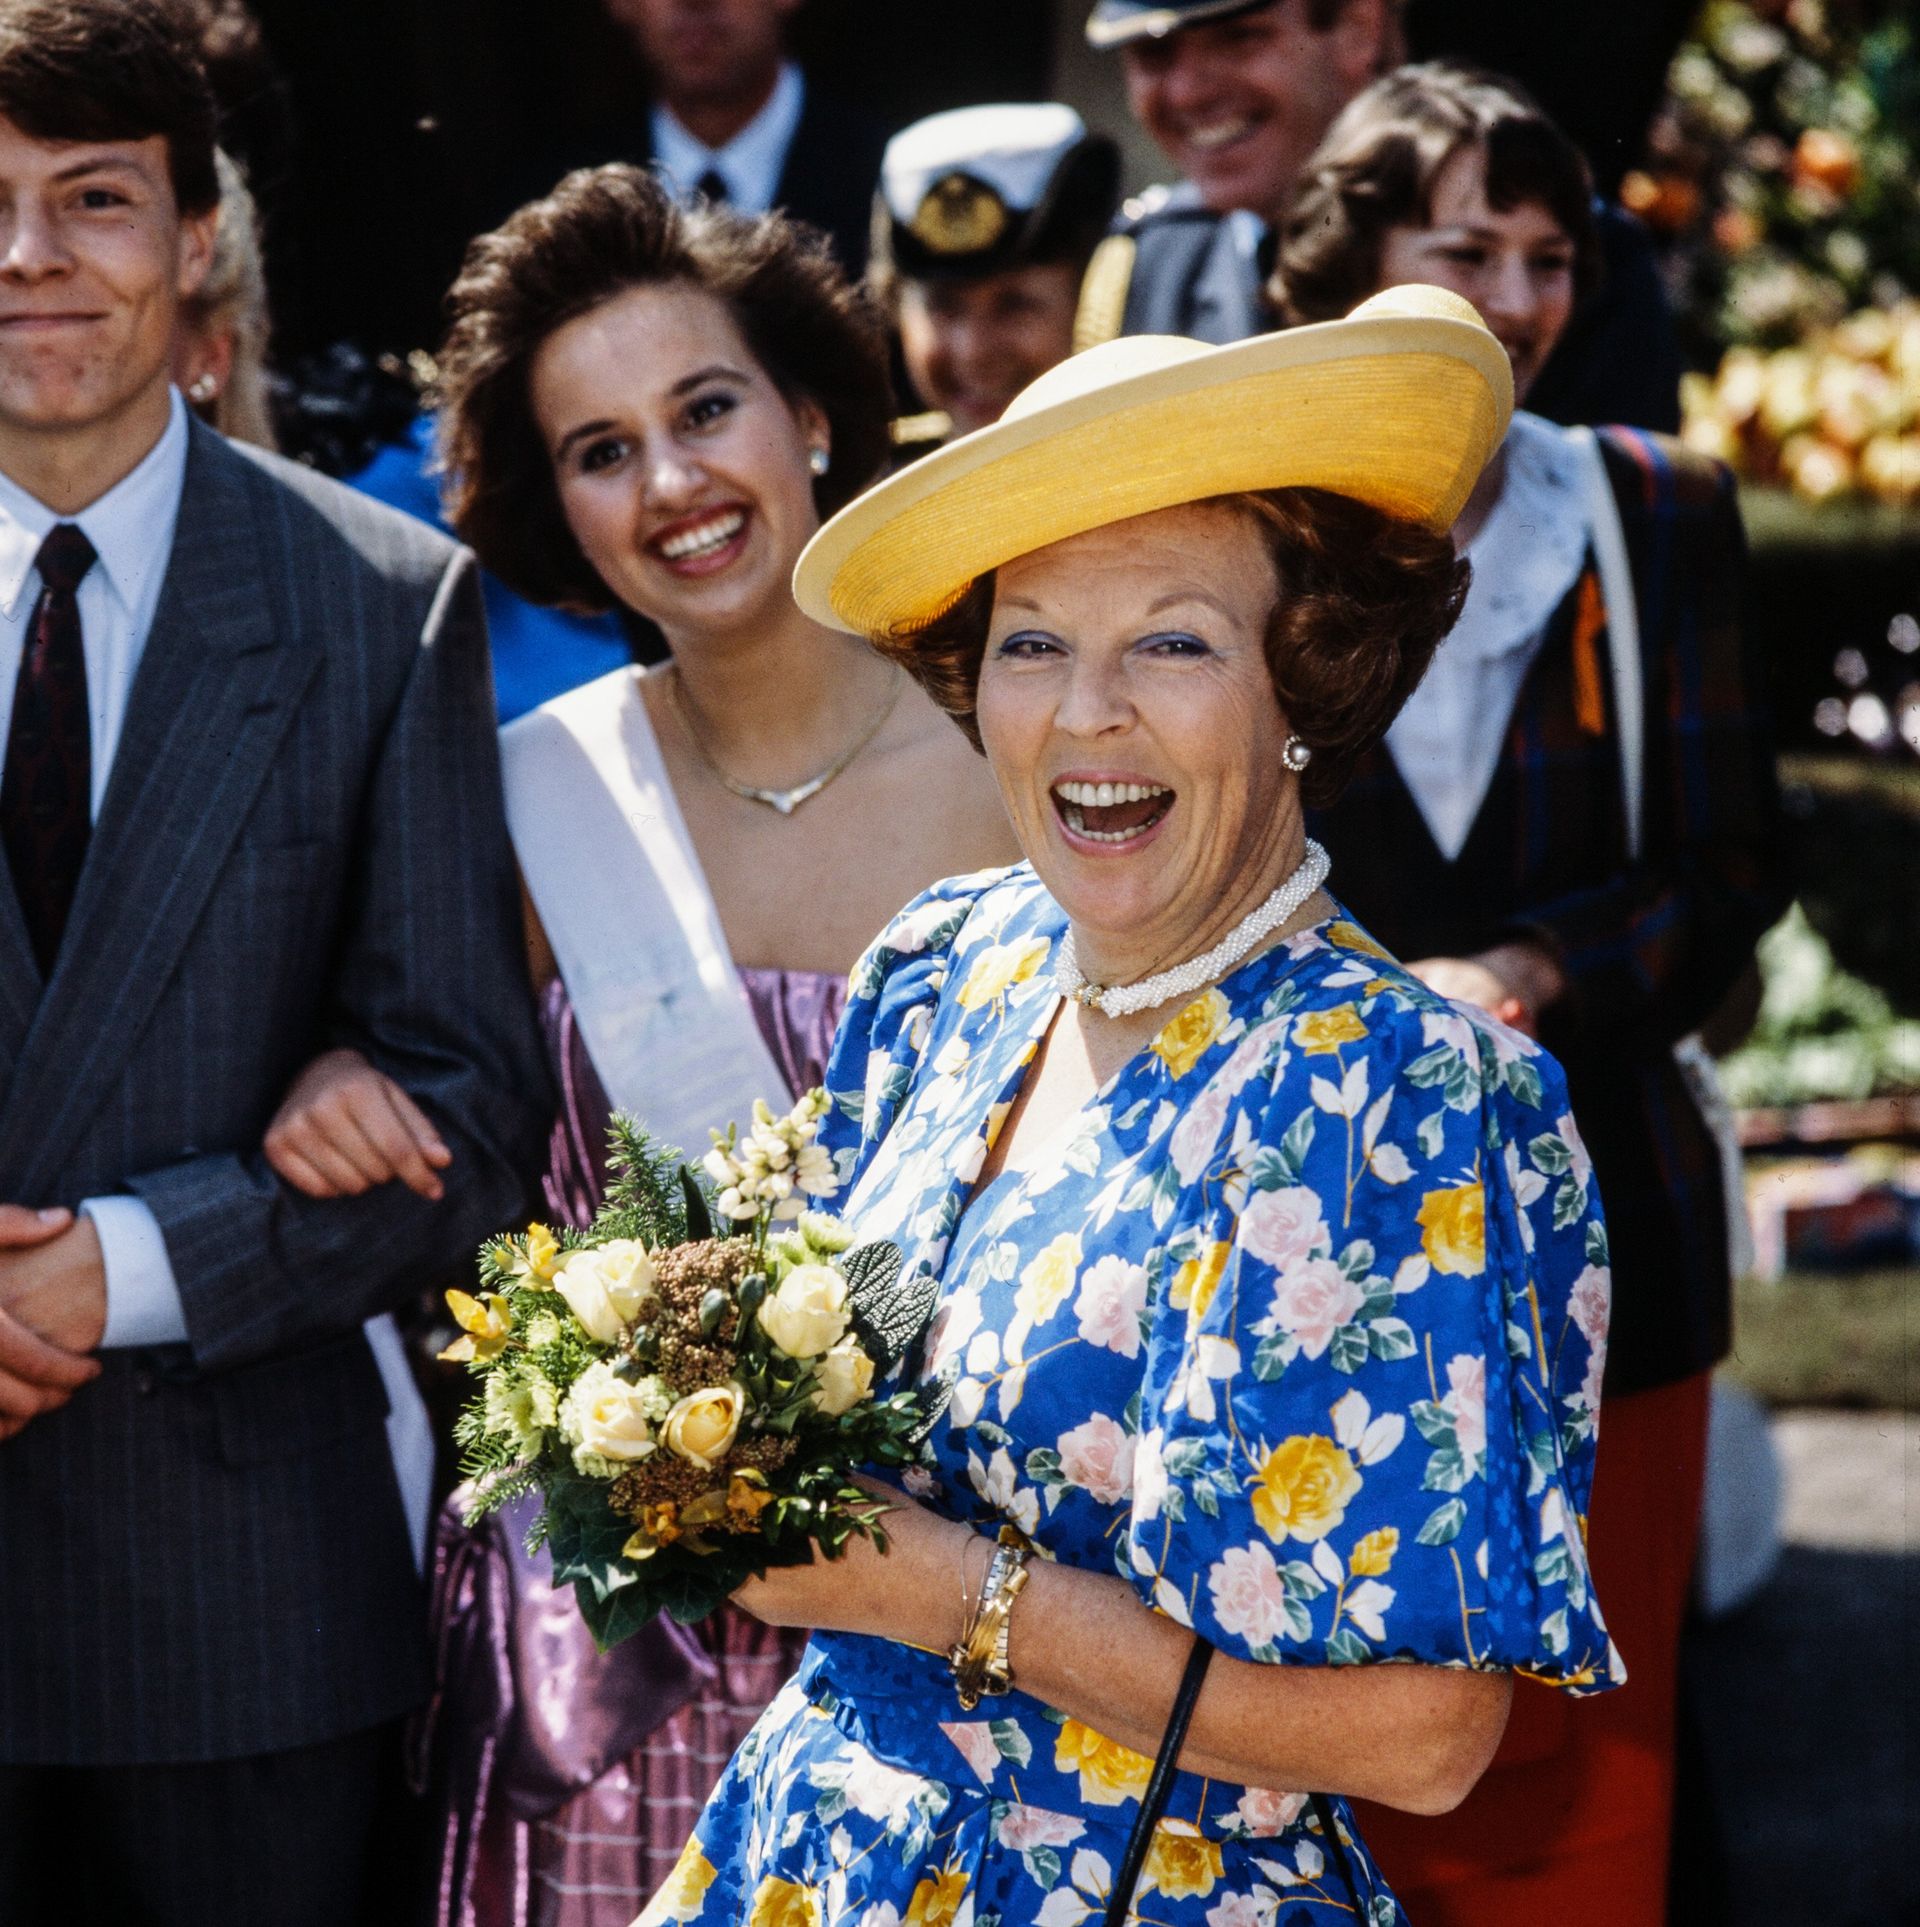 Koninginnedag 1989 in Goedereede en Oud-Beijerland, Zuid-Holland.